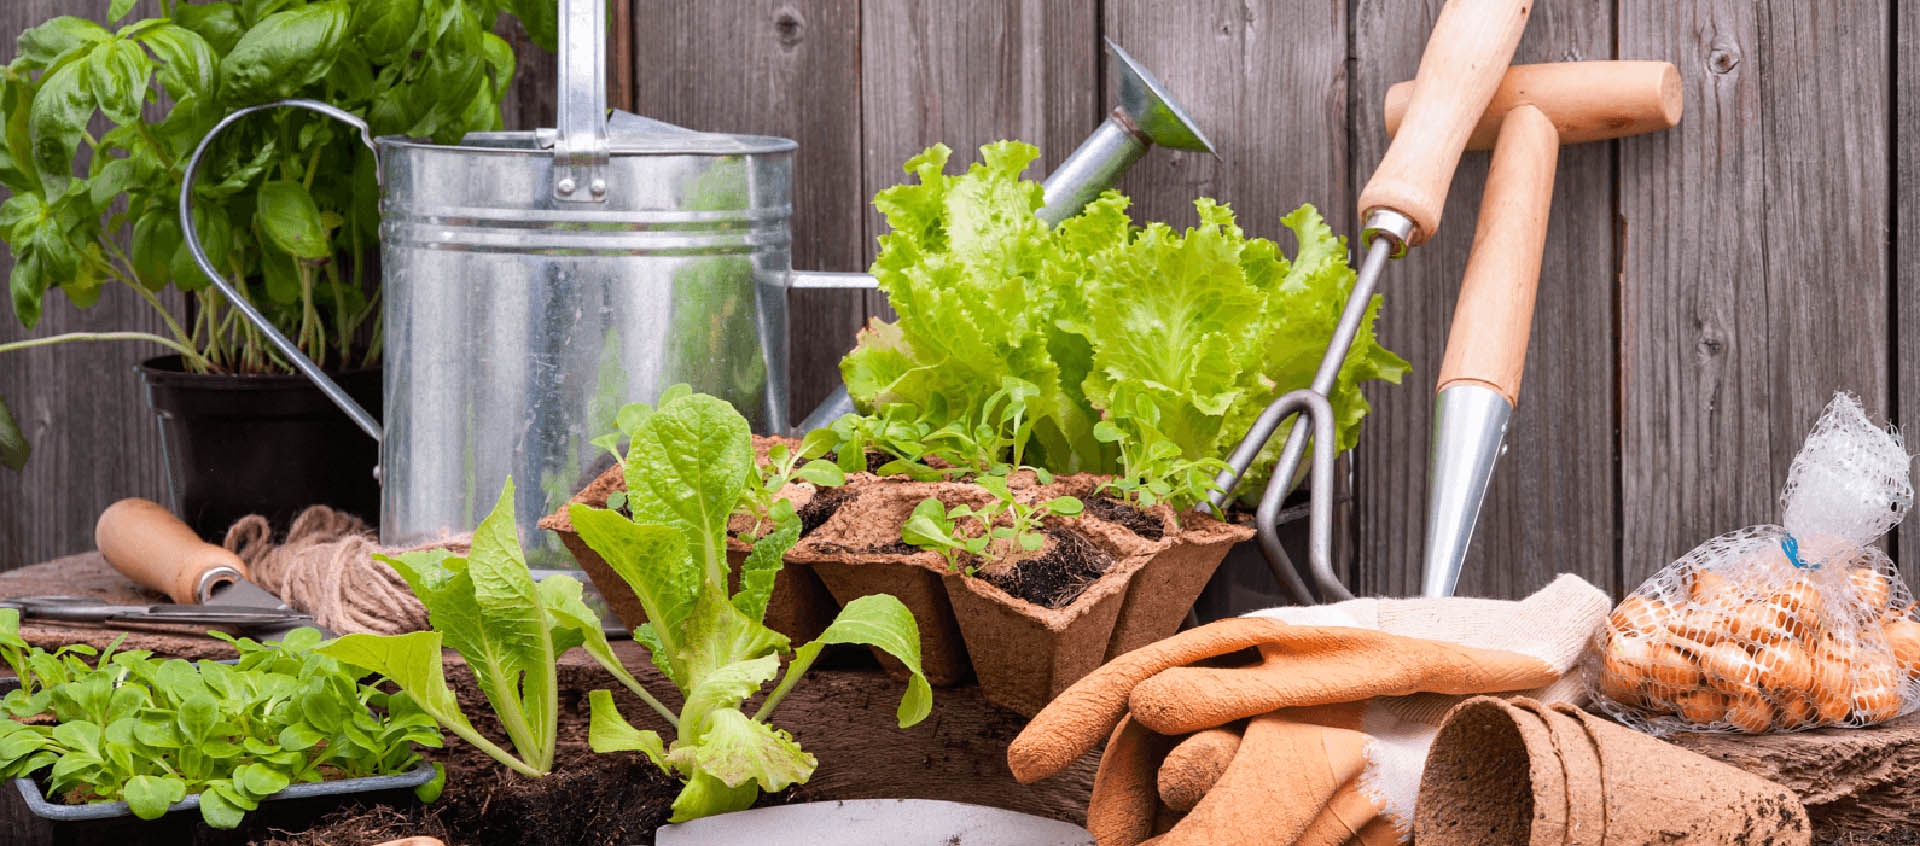 gardening-tips-that-work-winnipeg-featured-image